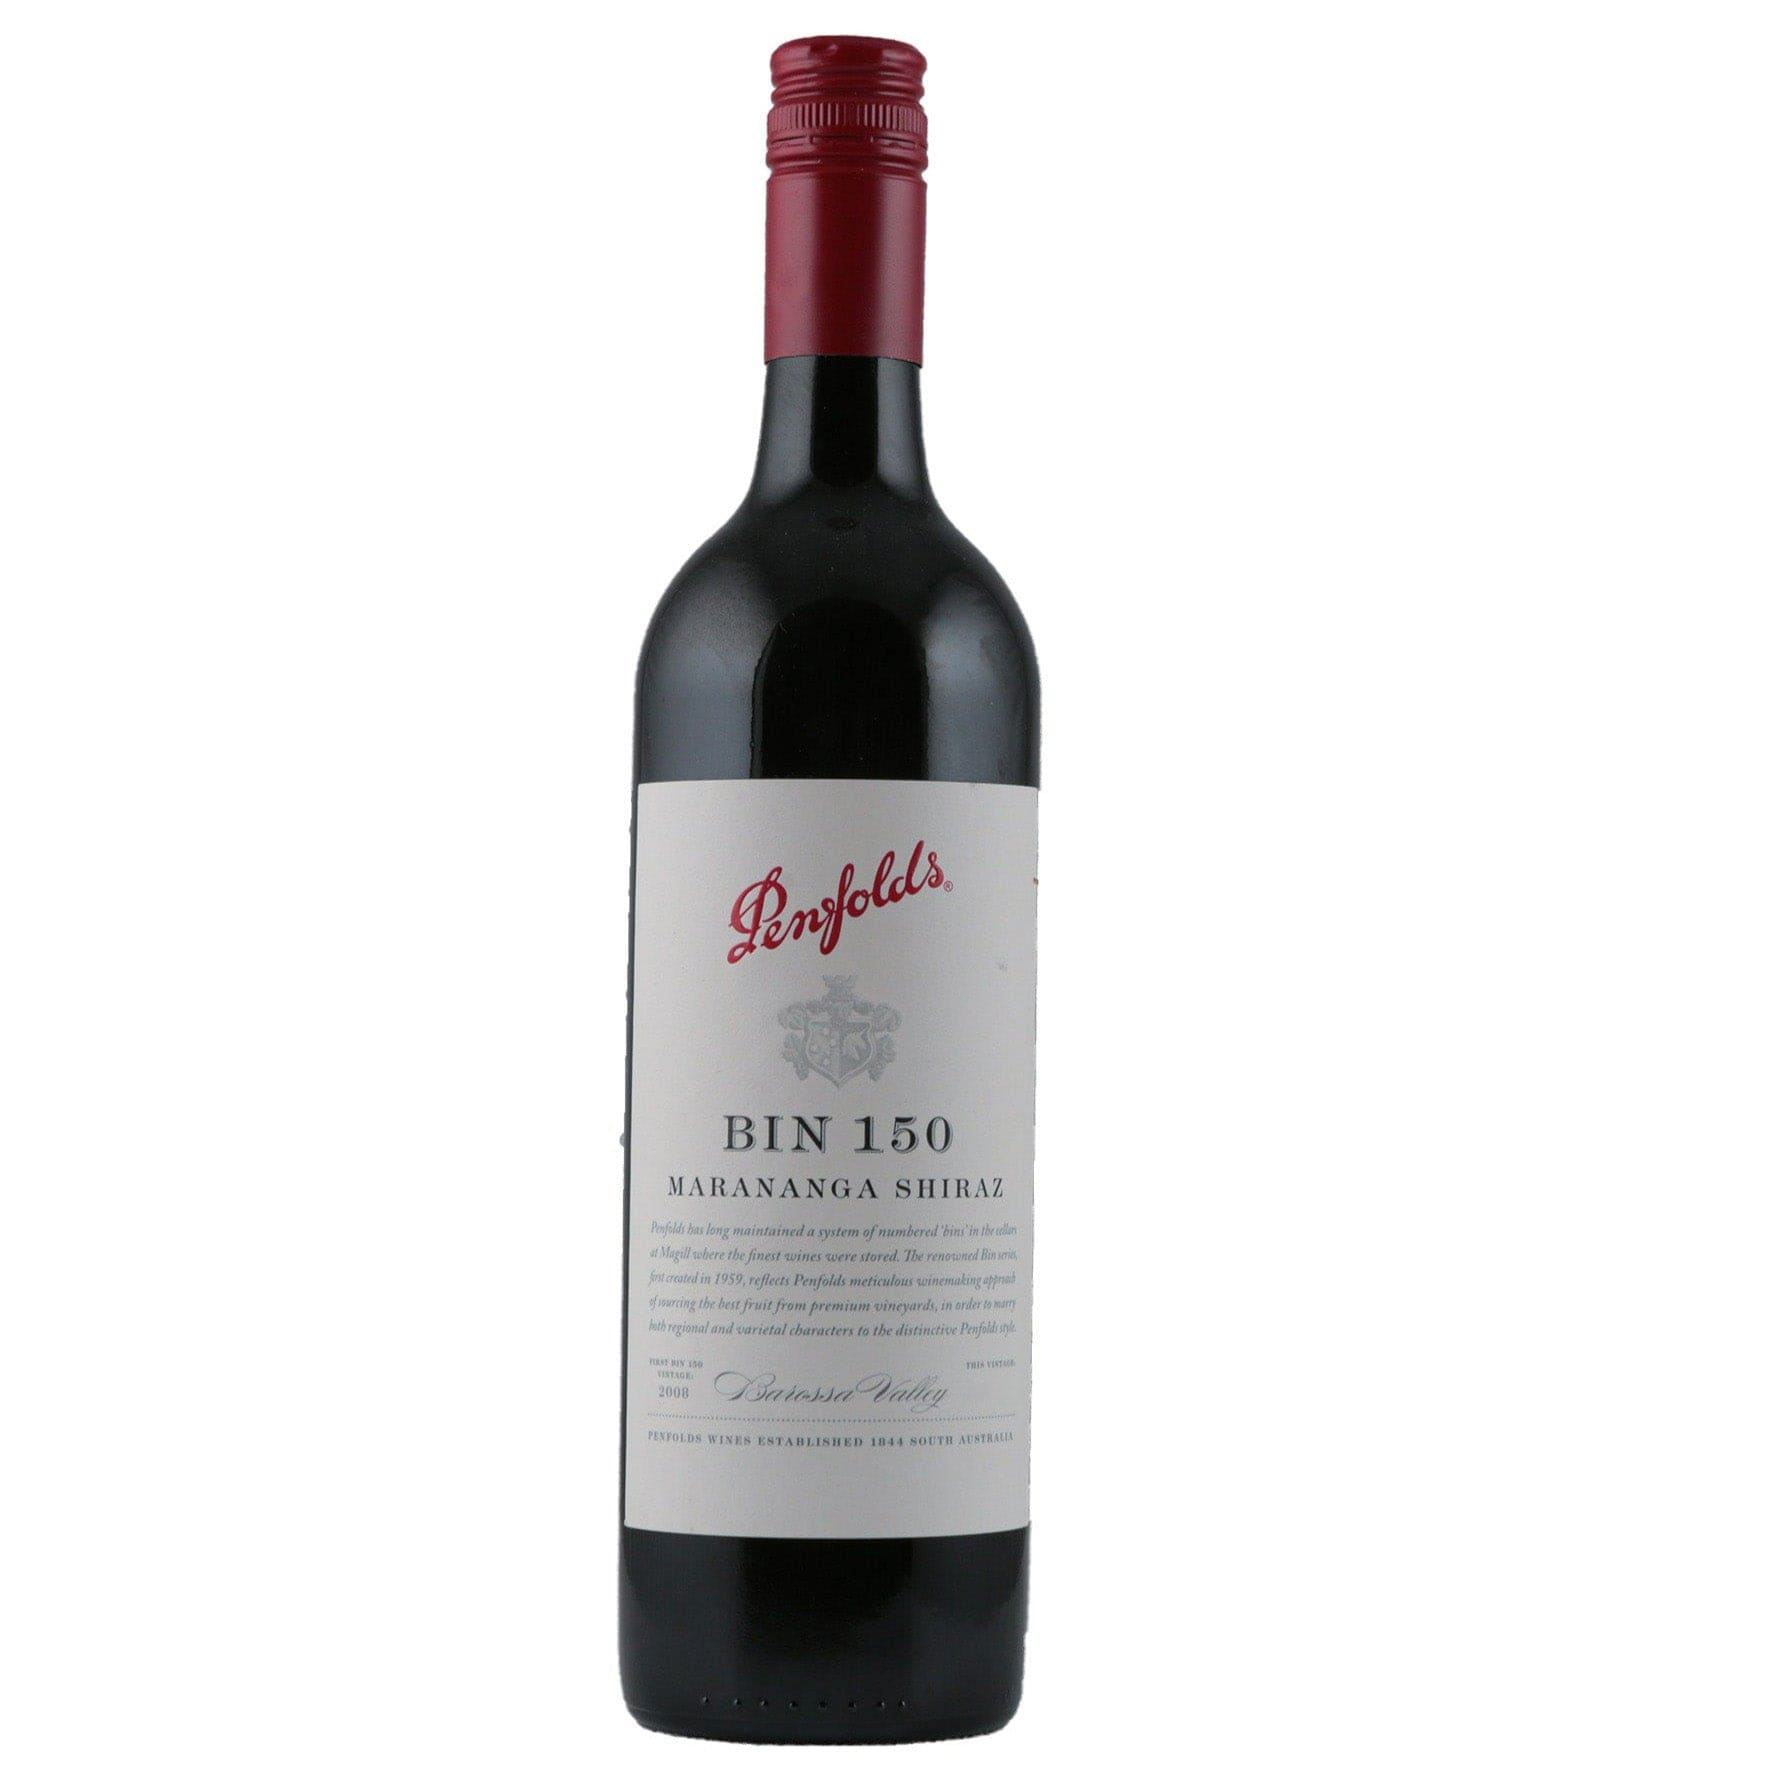 Single bottle of Red wine Penfolds, Bin 150 Marananga Shiraz Barossa Valley, 2016 100% Shiraz